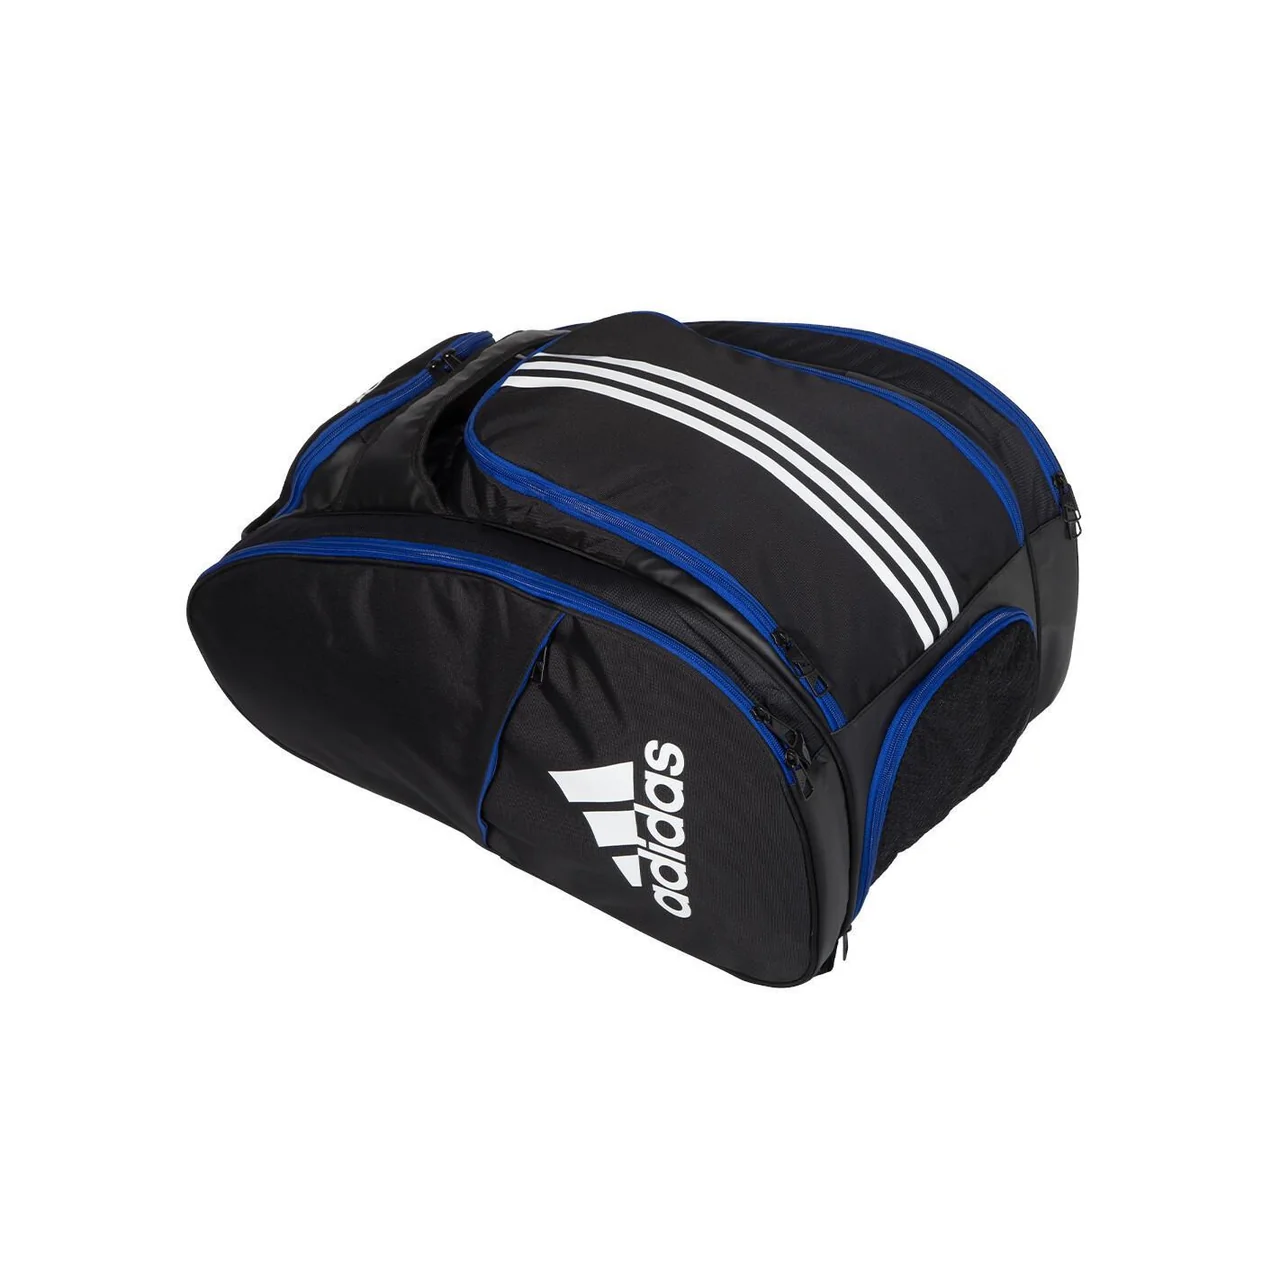 Adidas Racket Bag Multigame Black/Blue